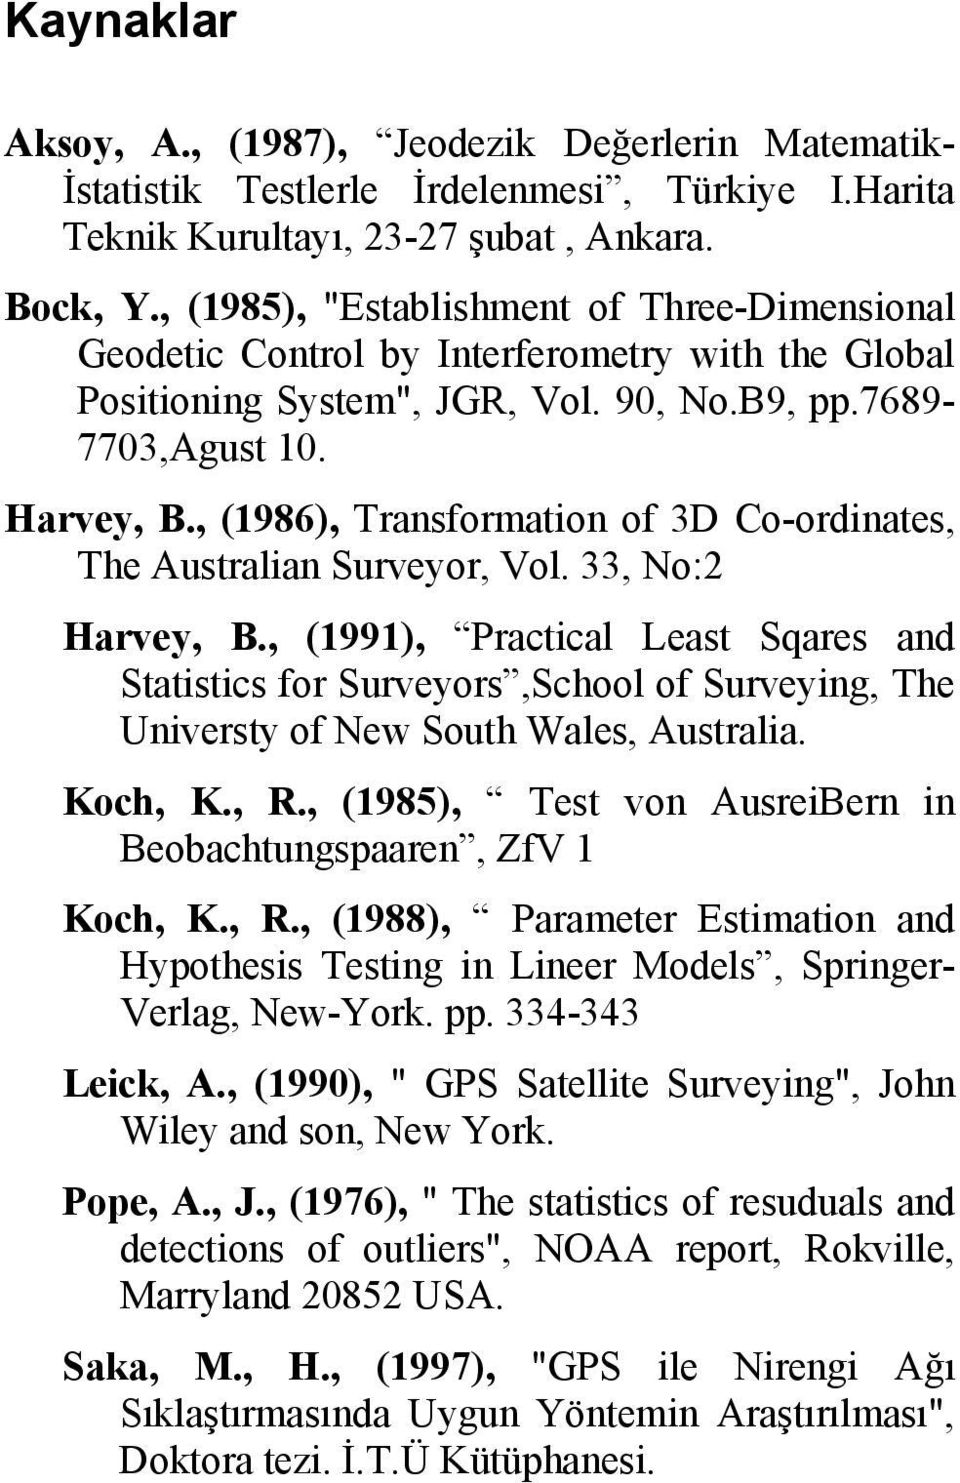 , (1986), ransforation of 3D Co-ordinates, he Australian Surveor, Vol. 33, No: Harve, B.